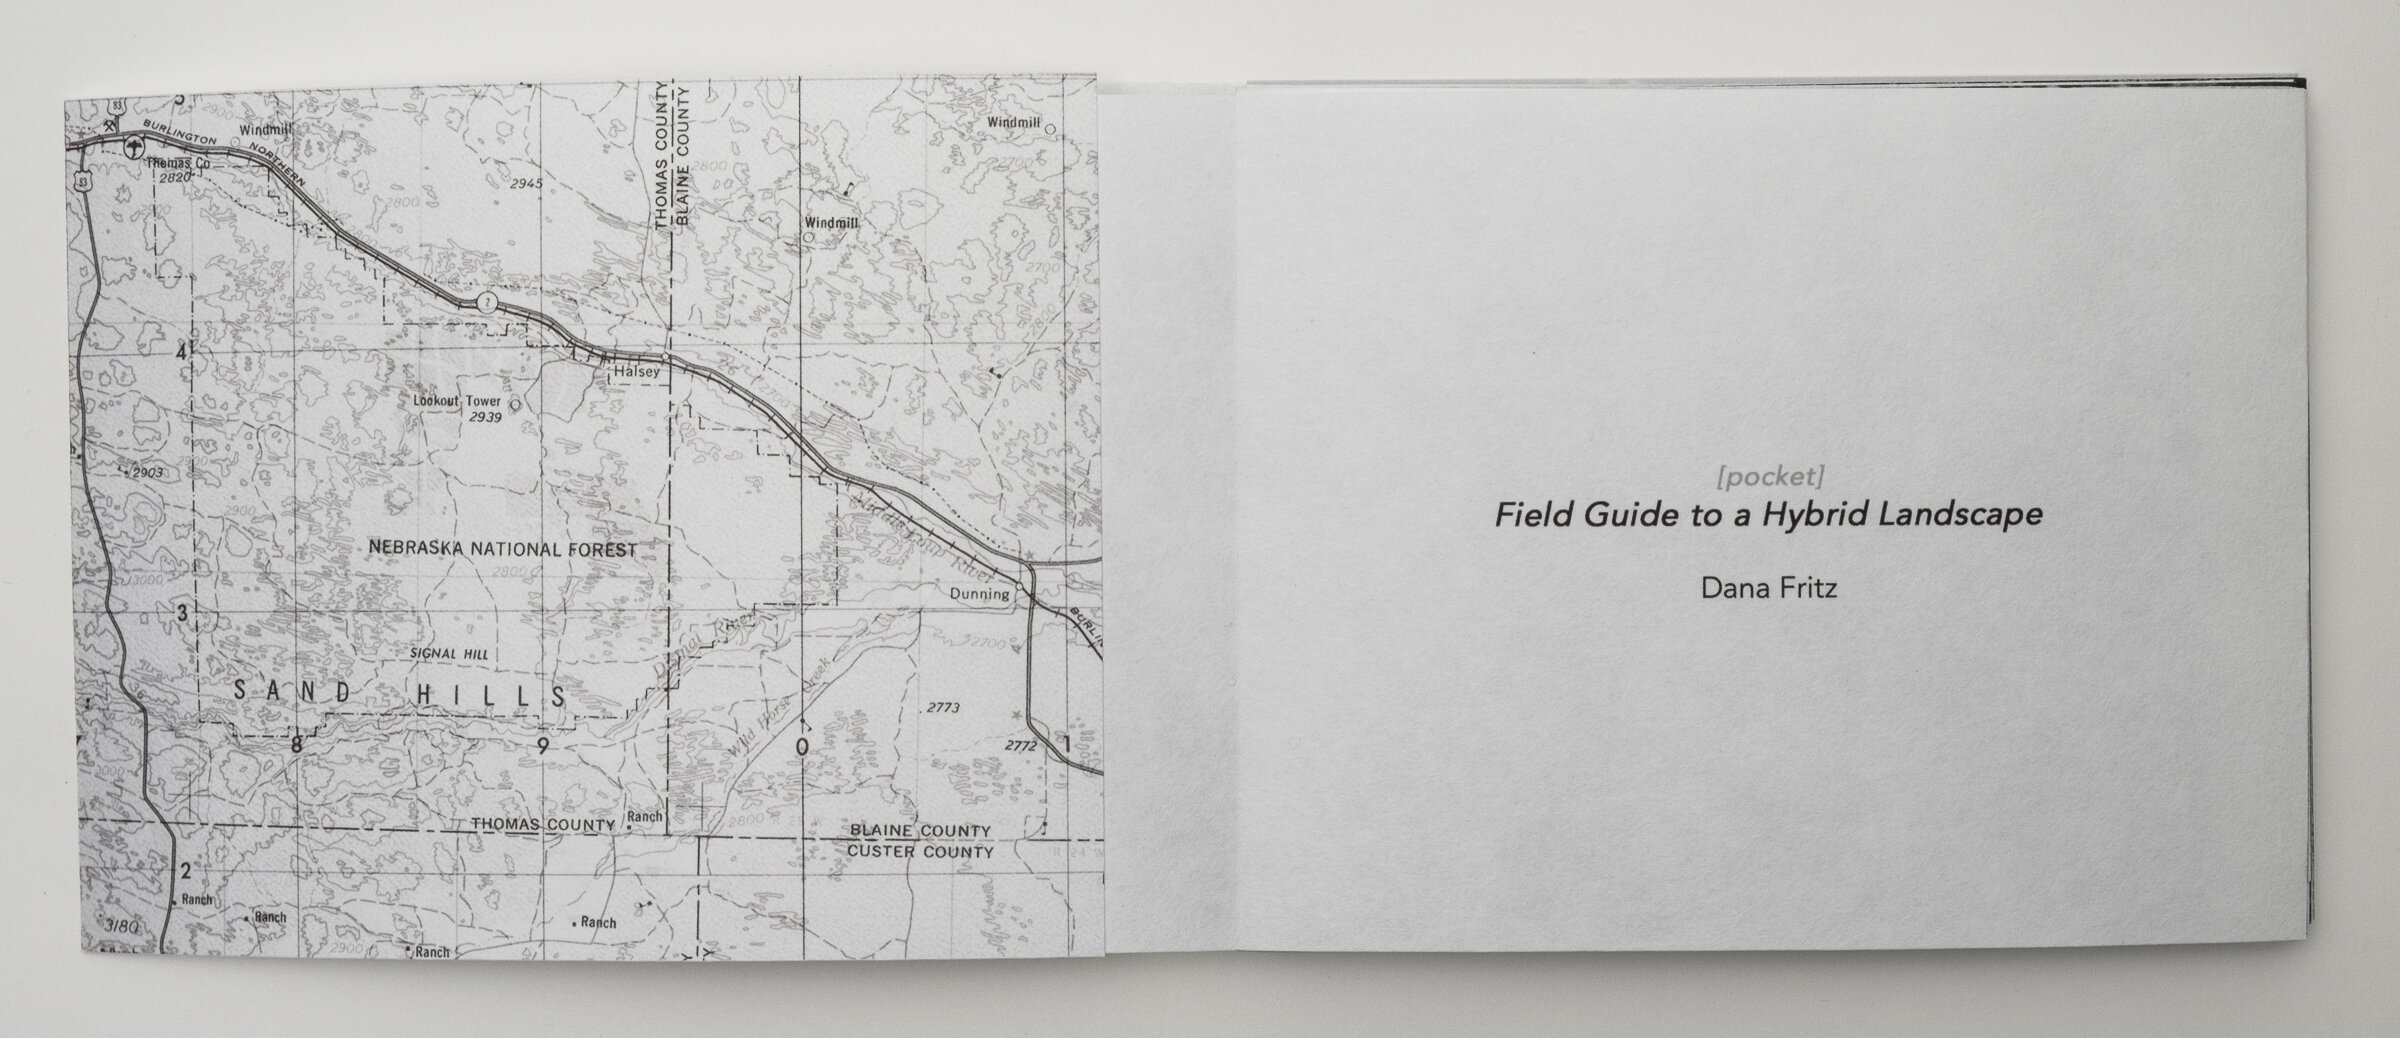 Fritz_Pocket Field Guide to a Hybrid Landscape 2 .jpg